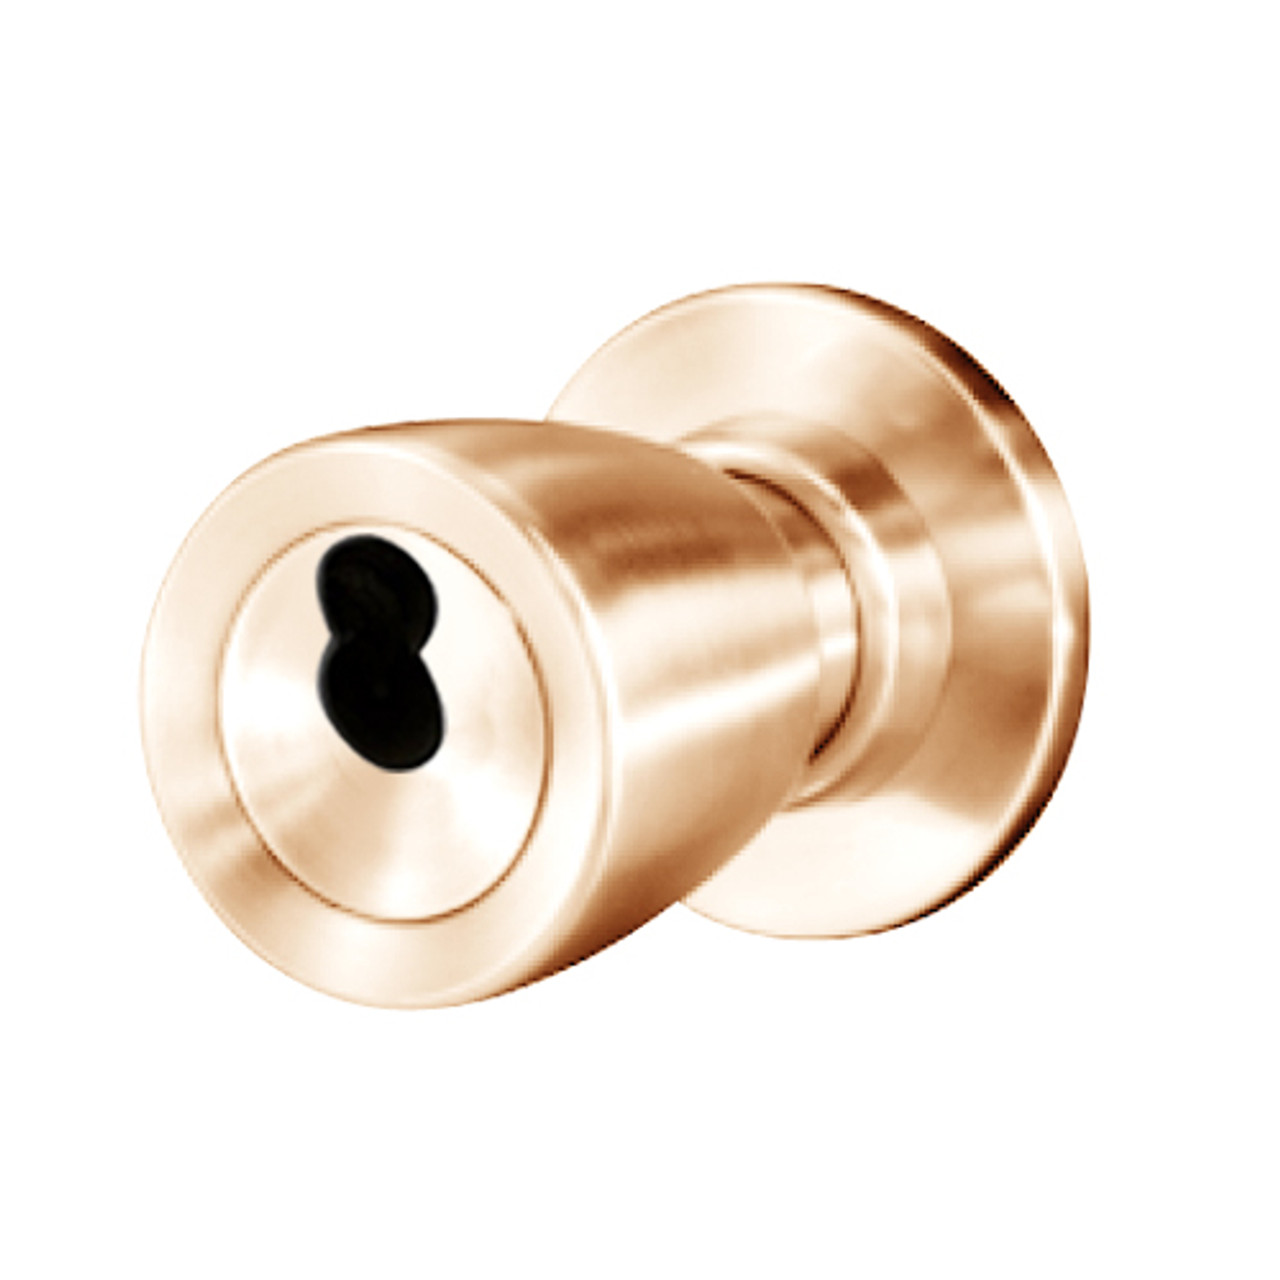 8K57YR6CS3611 Best 8K Series Exit Heavy Duty Cylindrical Knob Locks with Tulip Style in Bright Bronze